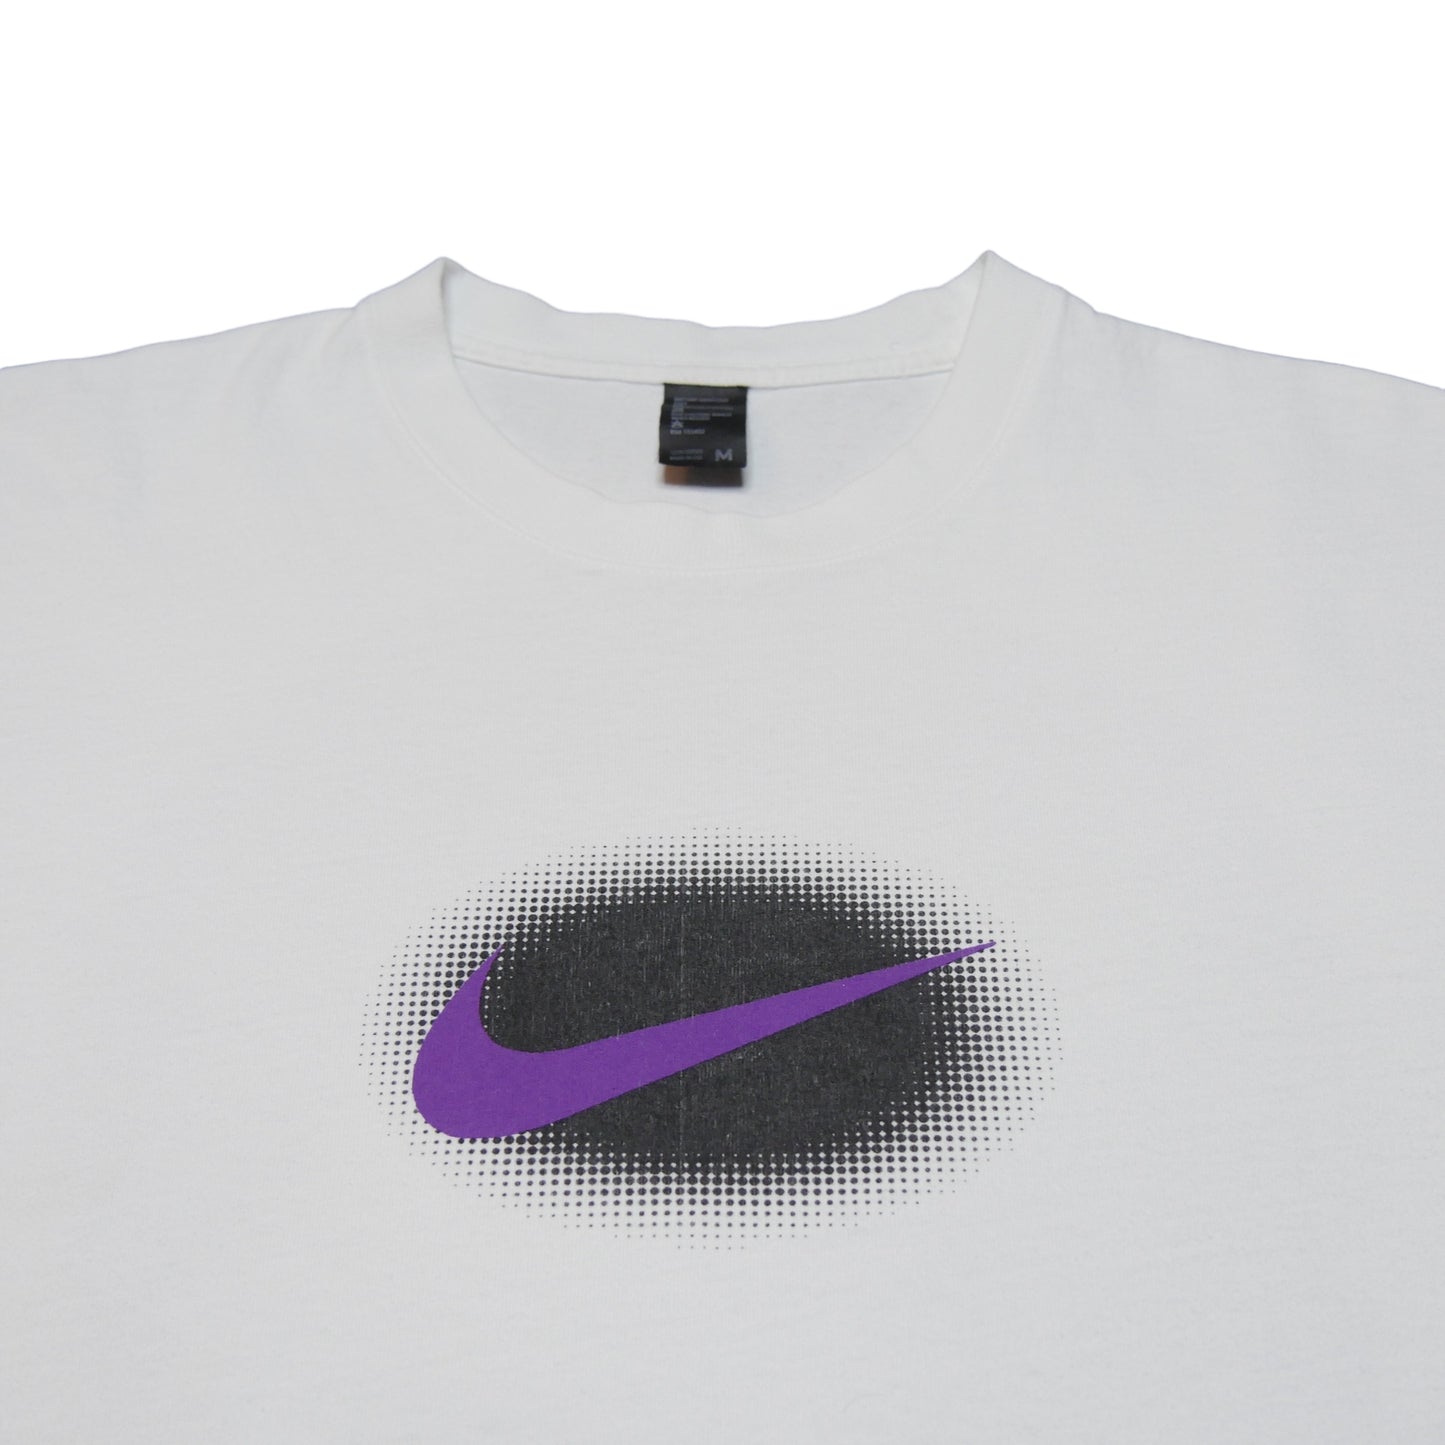 'Frobe' Kobe Bryant Nike Shirt